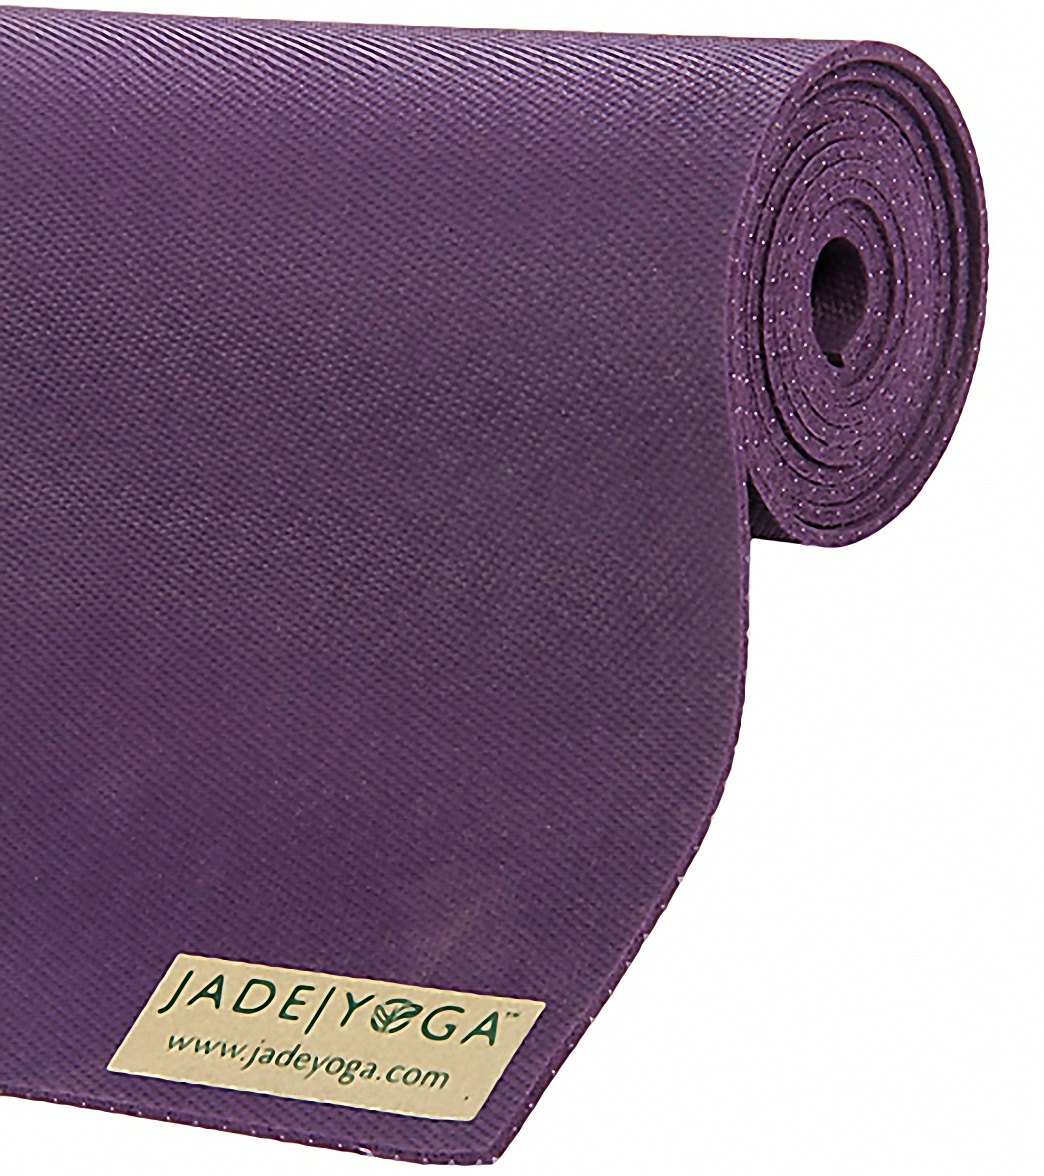 Jade Yoga Travel Natural Rubber Yoga Mat 68 3.5mm at